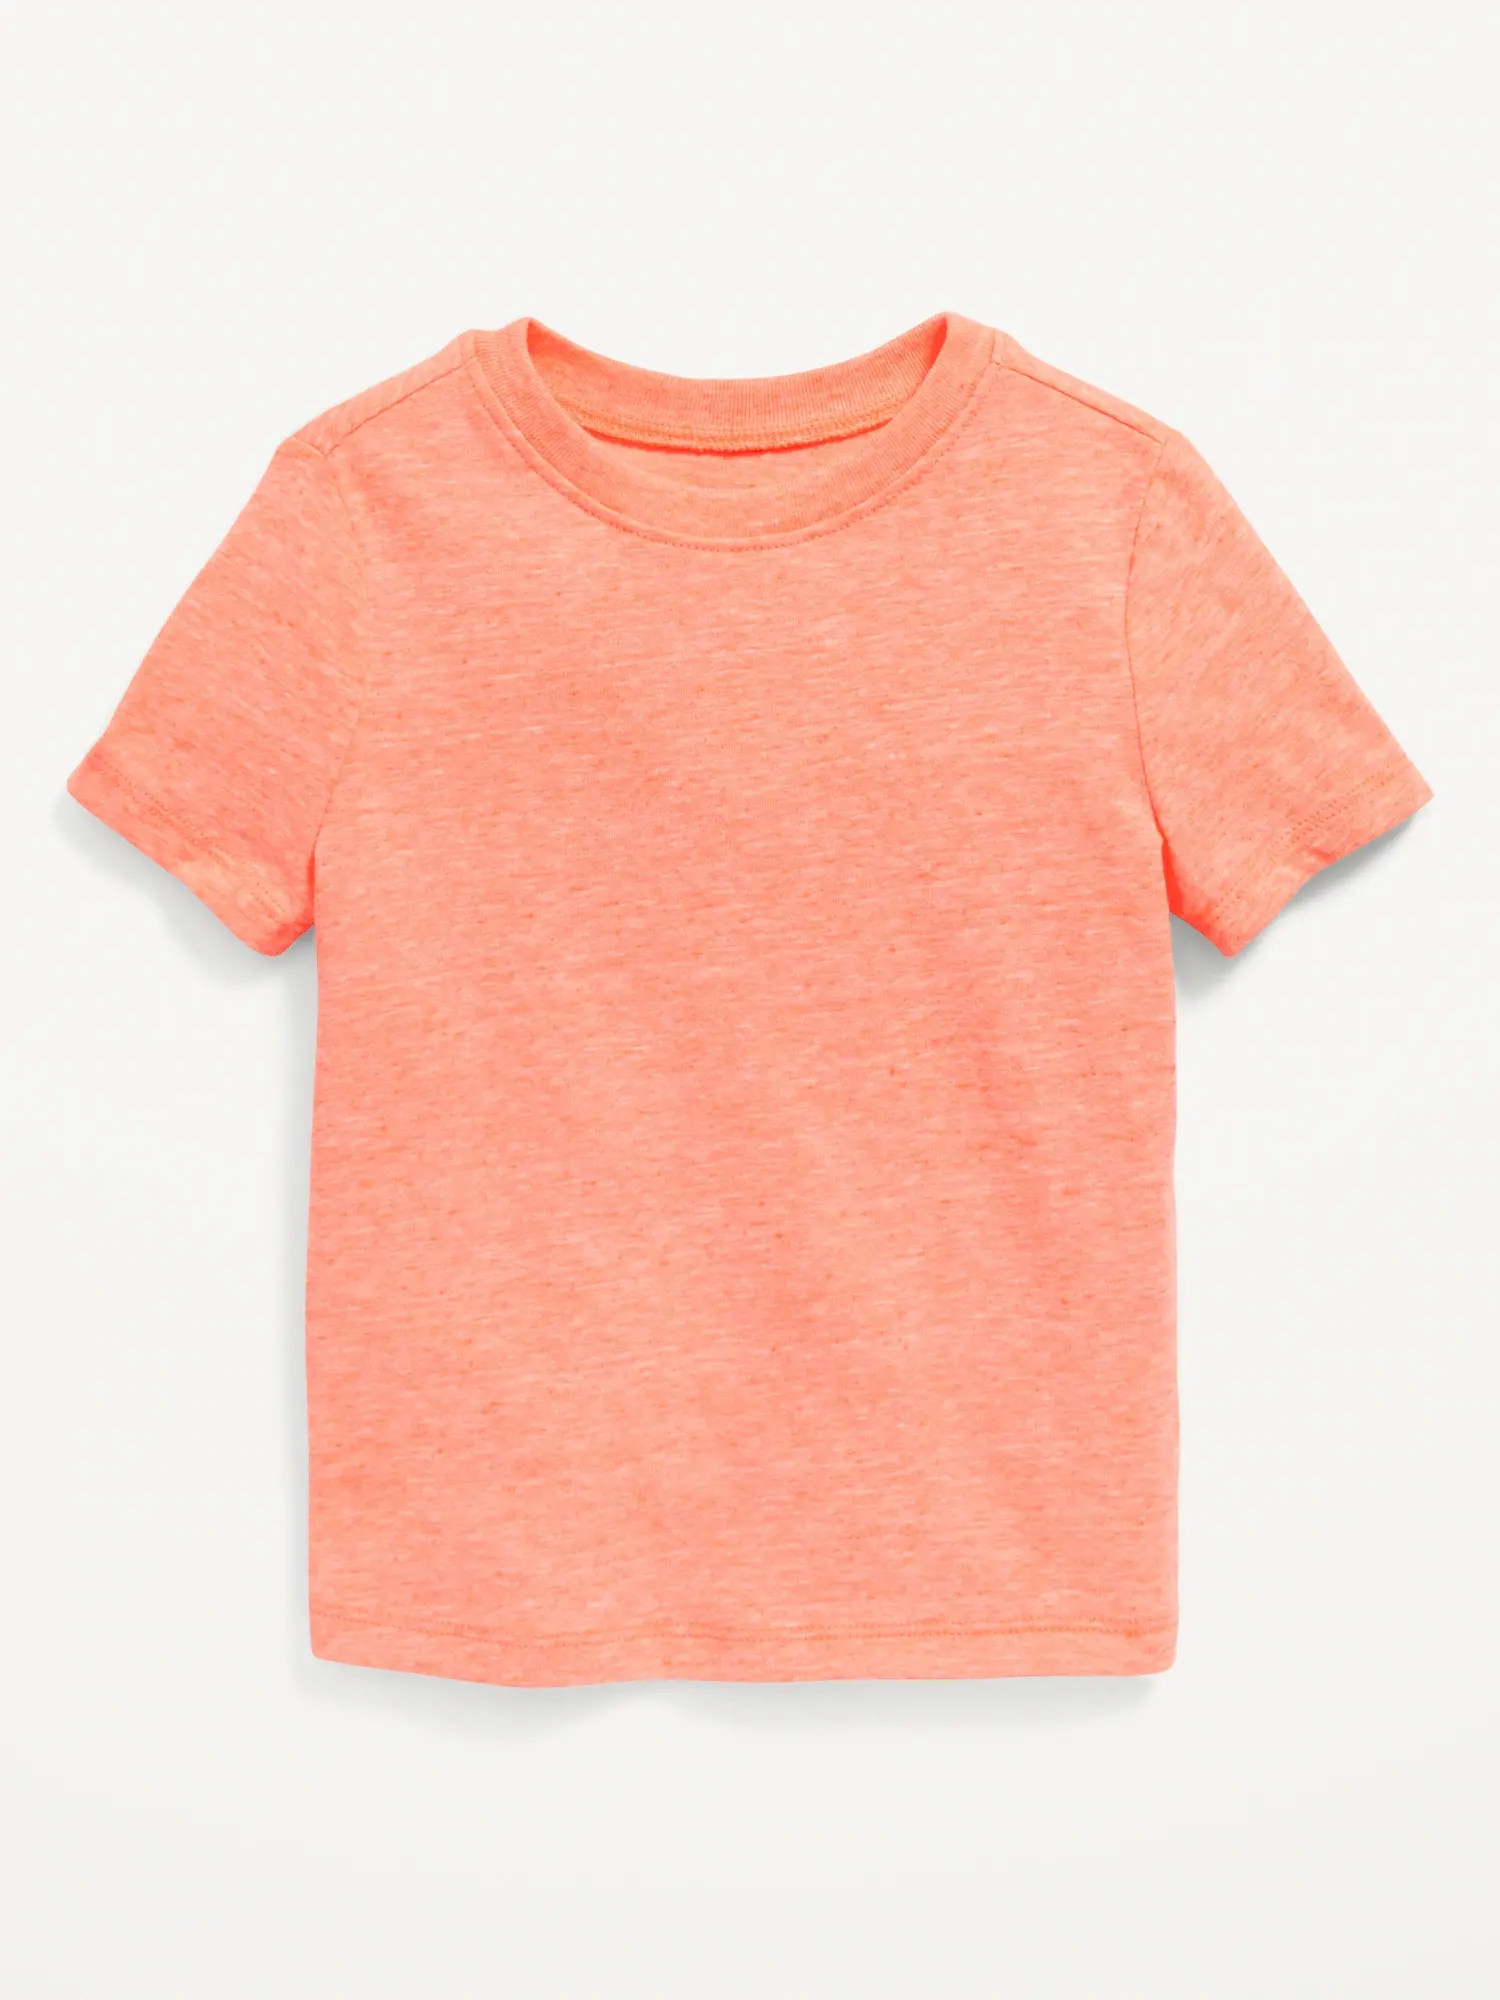 Old Navy Unisex Short-Sleeve Slub-Knit T-Shirt for Toddler pink. 1